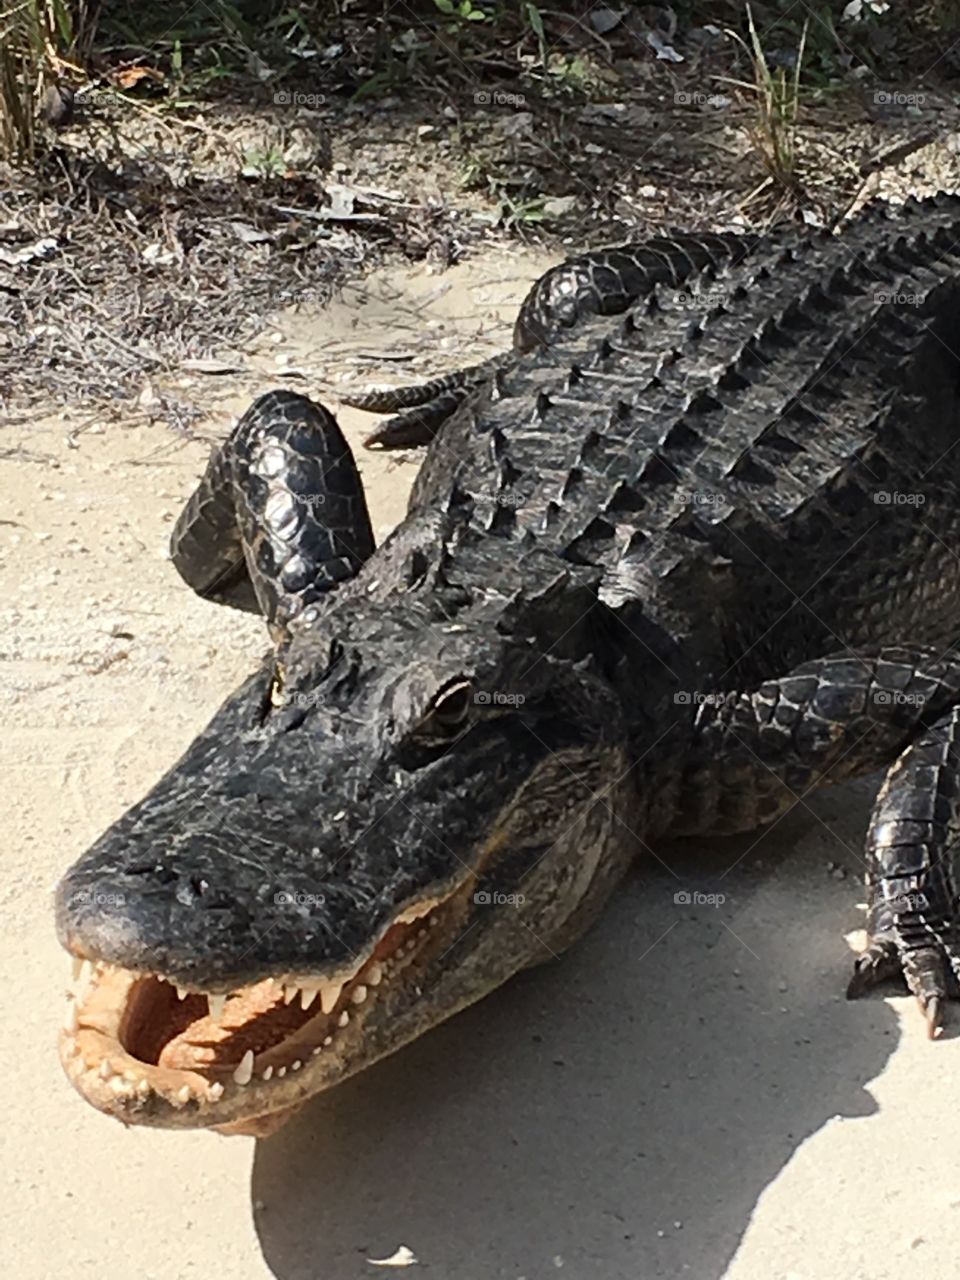 Smiling alligator close up